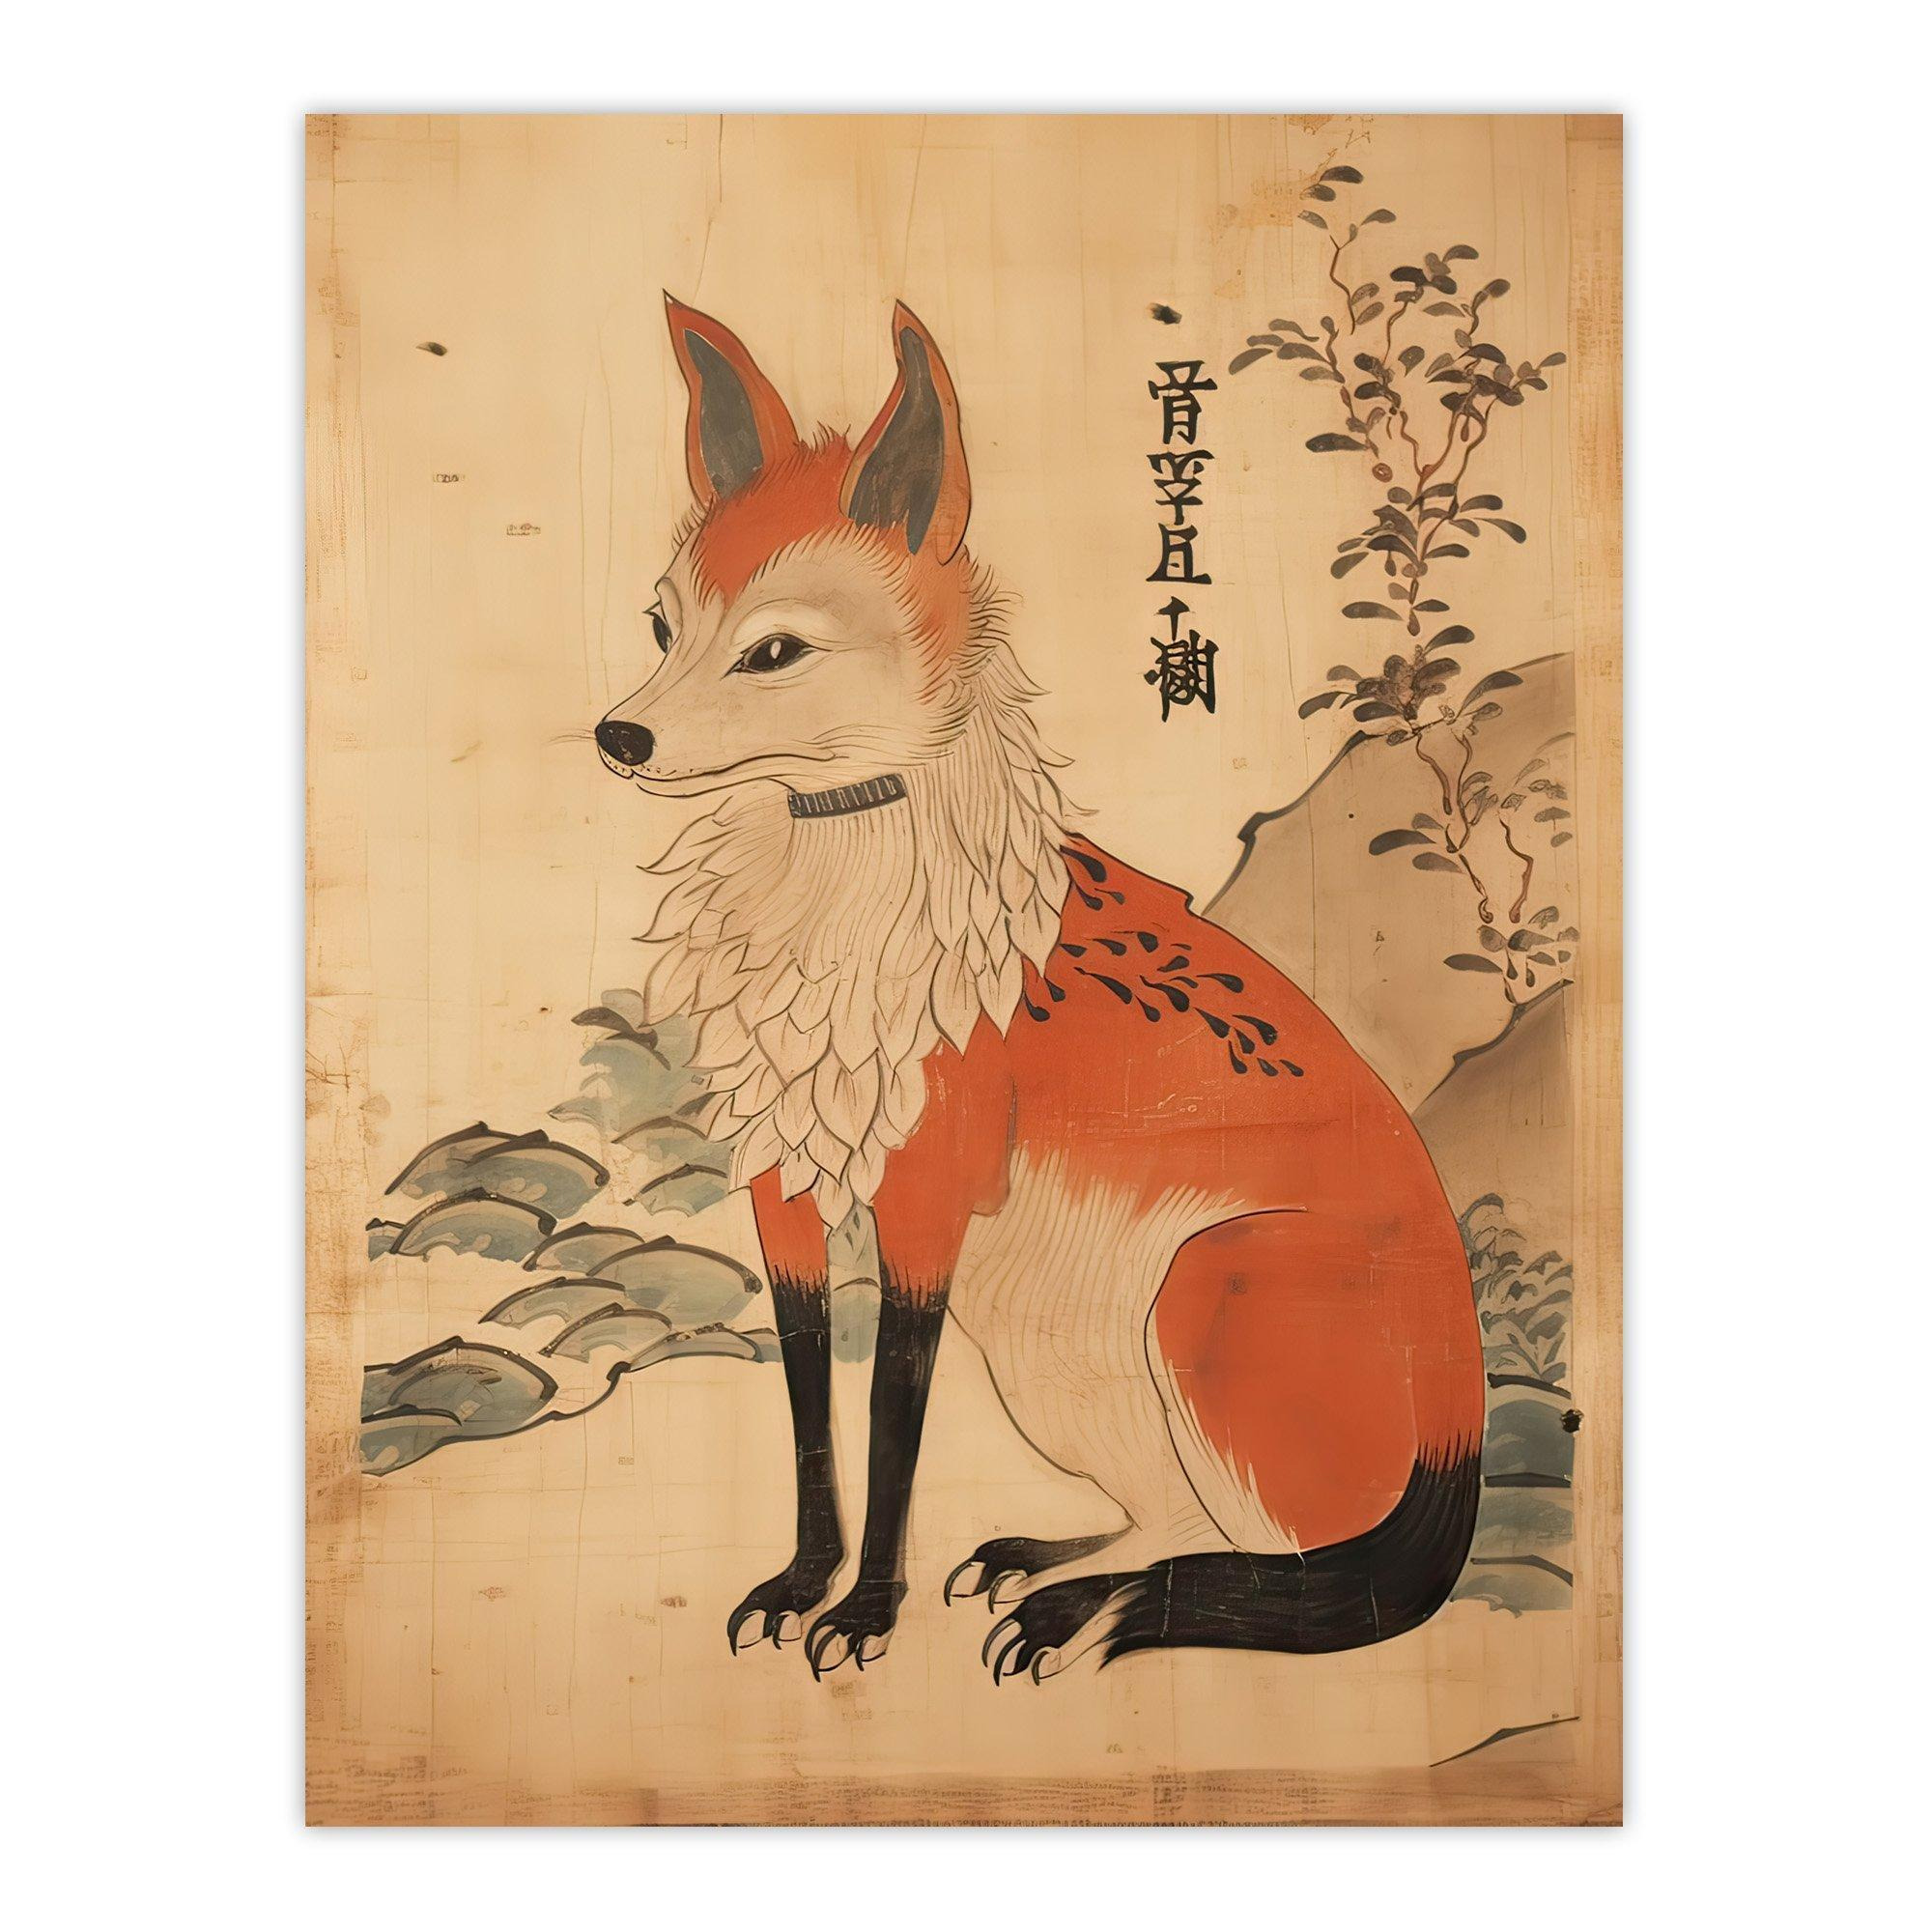 Edo Period Kitsune Red Fox Portrait Simple Japanese Ukiyo-e Style Painting Unframed Wall Art Print Poster Home Decor Premium - image 1